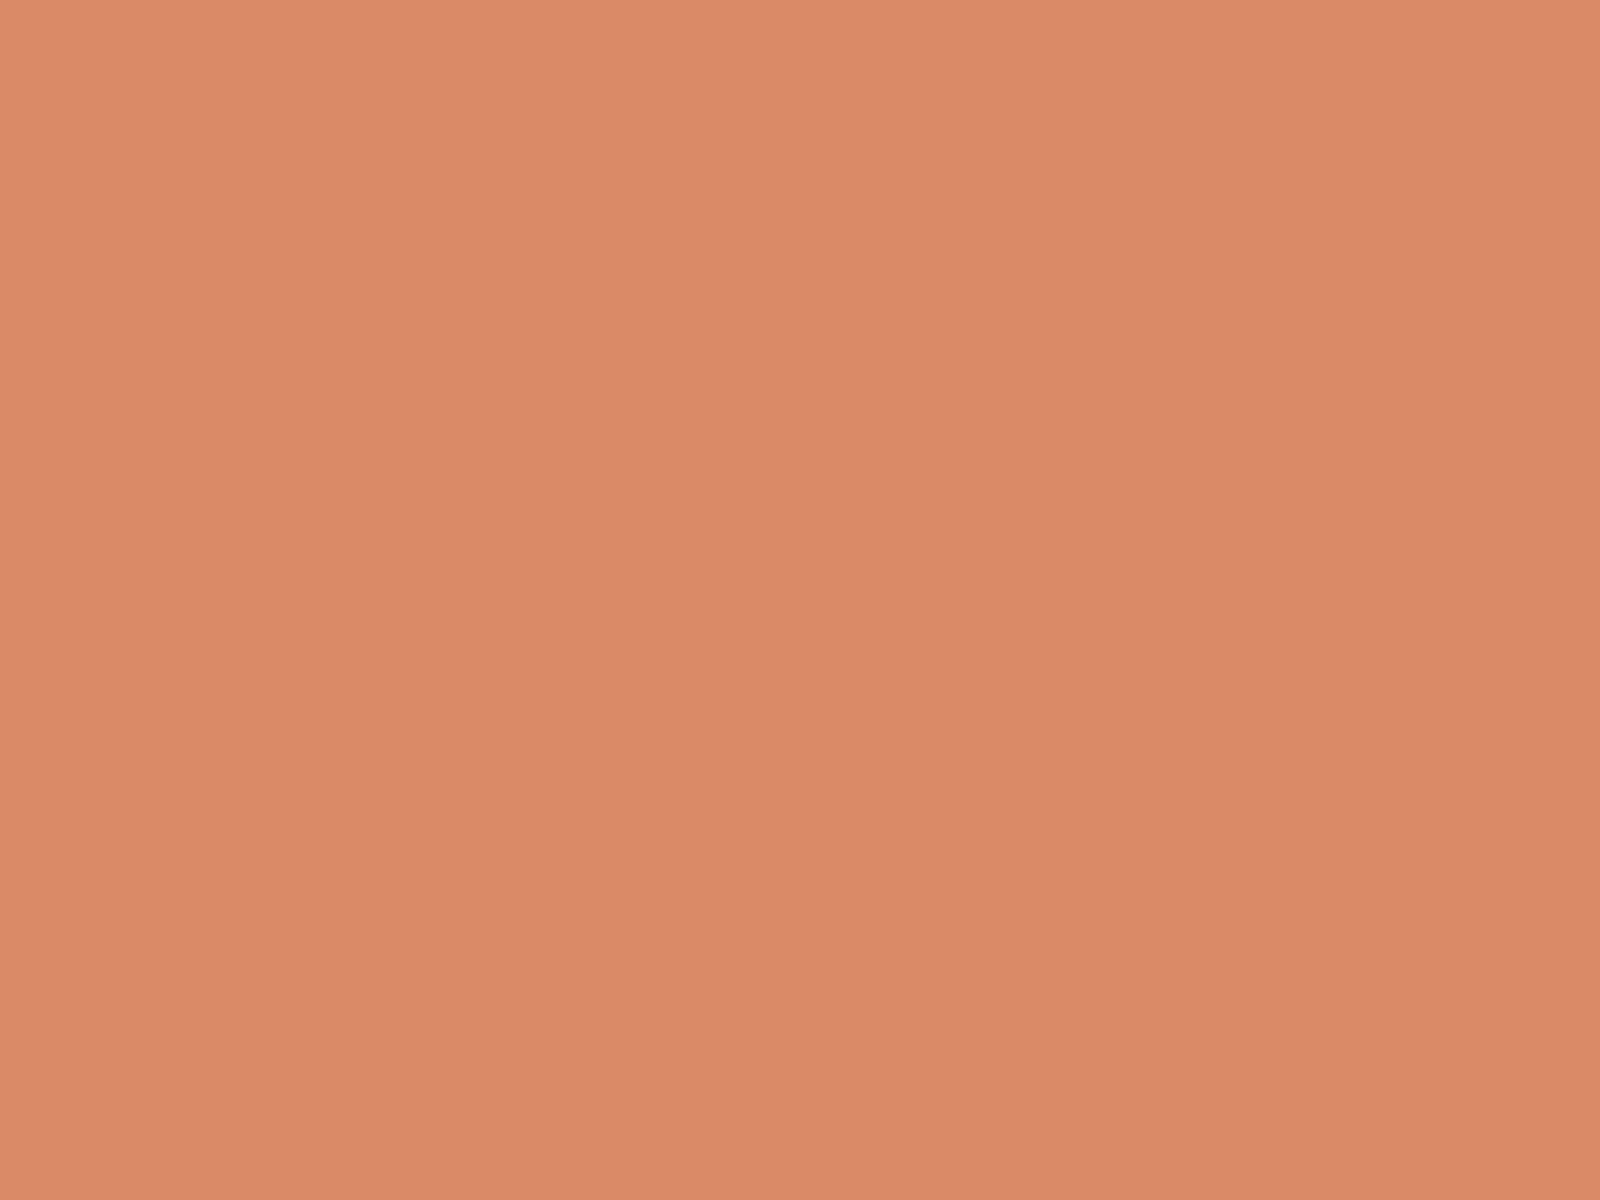 1600x1200 Copper Crayola Solid Color Background